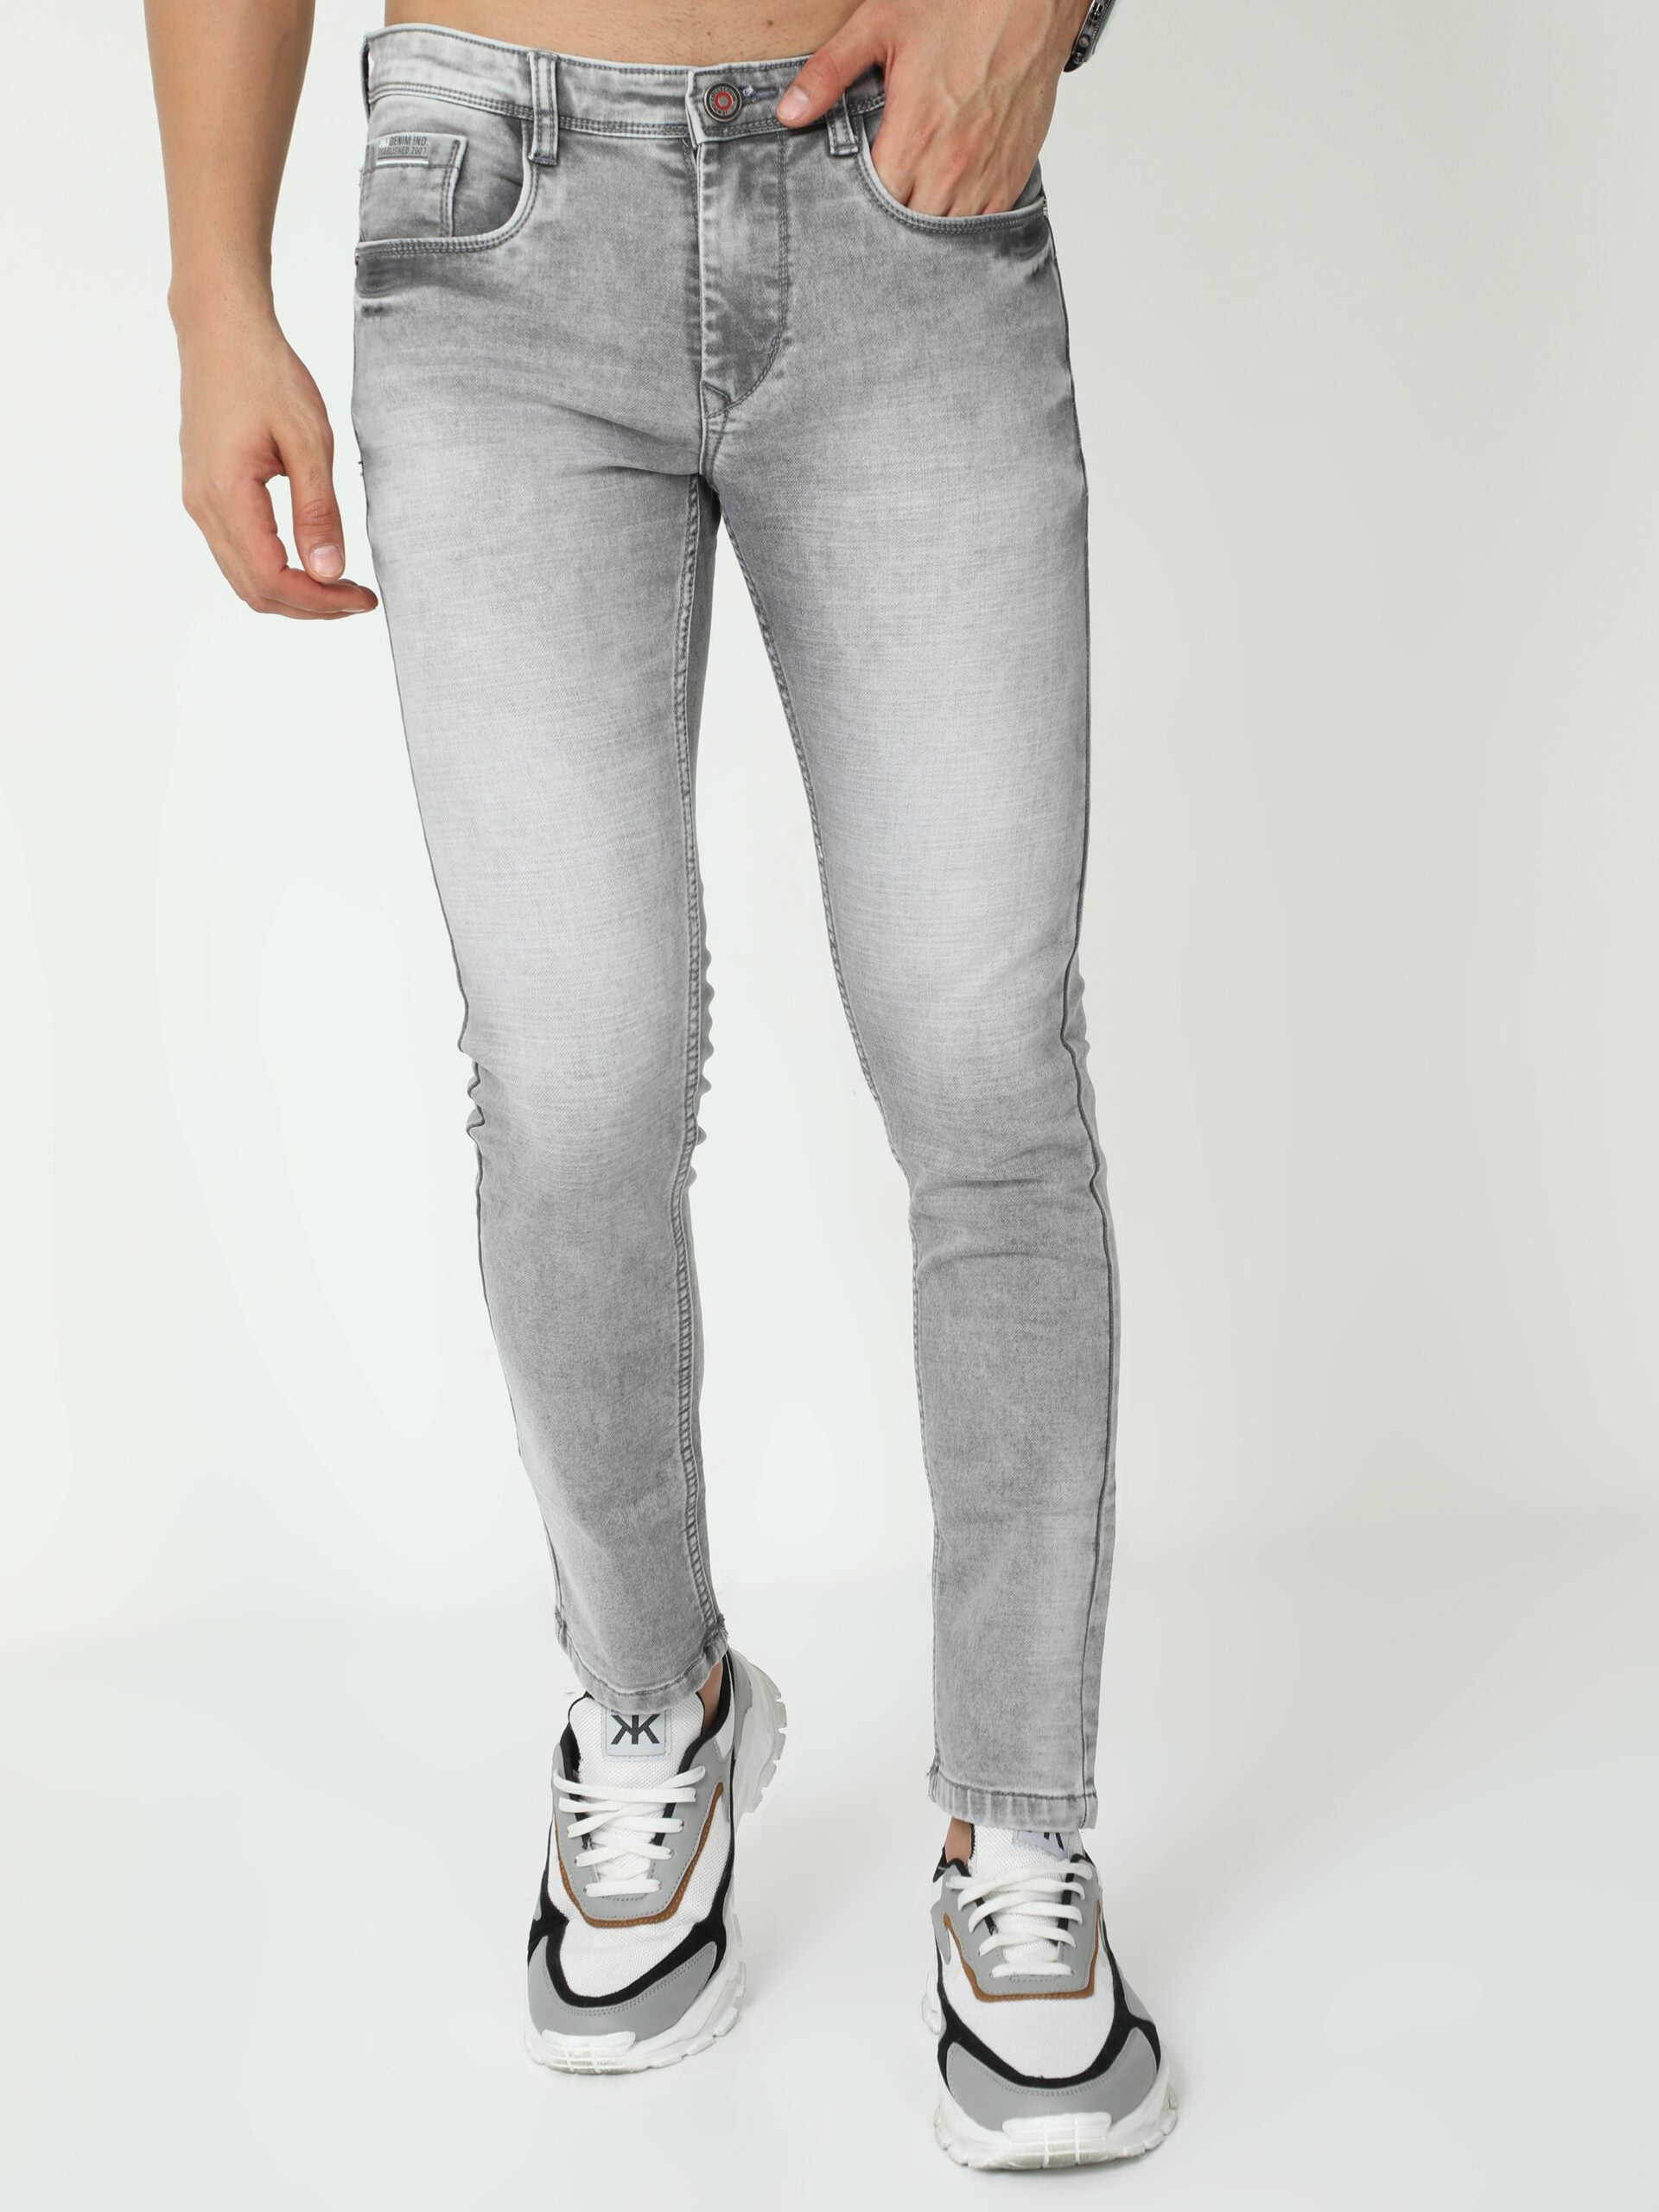 Buy Stylish Ice Grey Mens Slim Fit Jeans – Rockstar Jeans